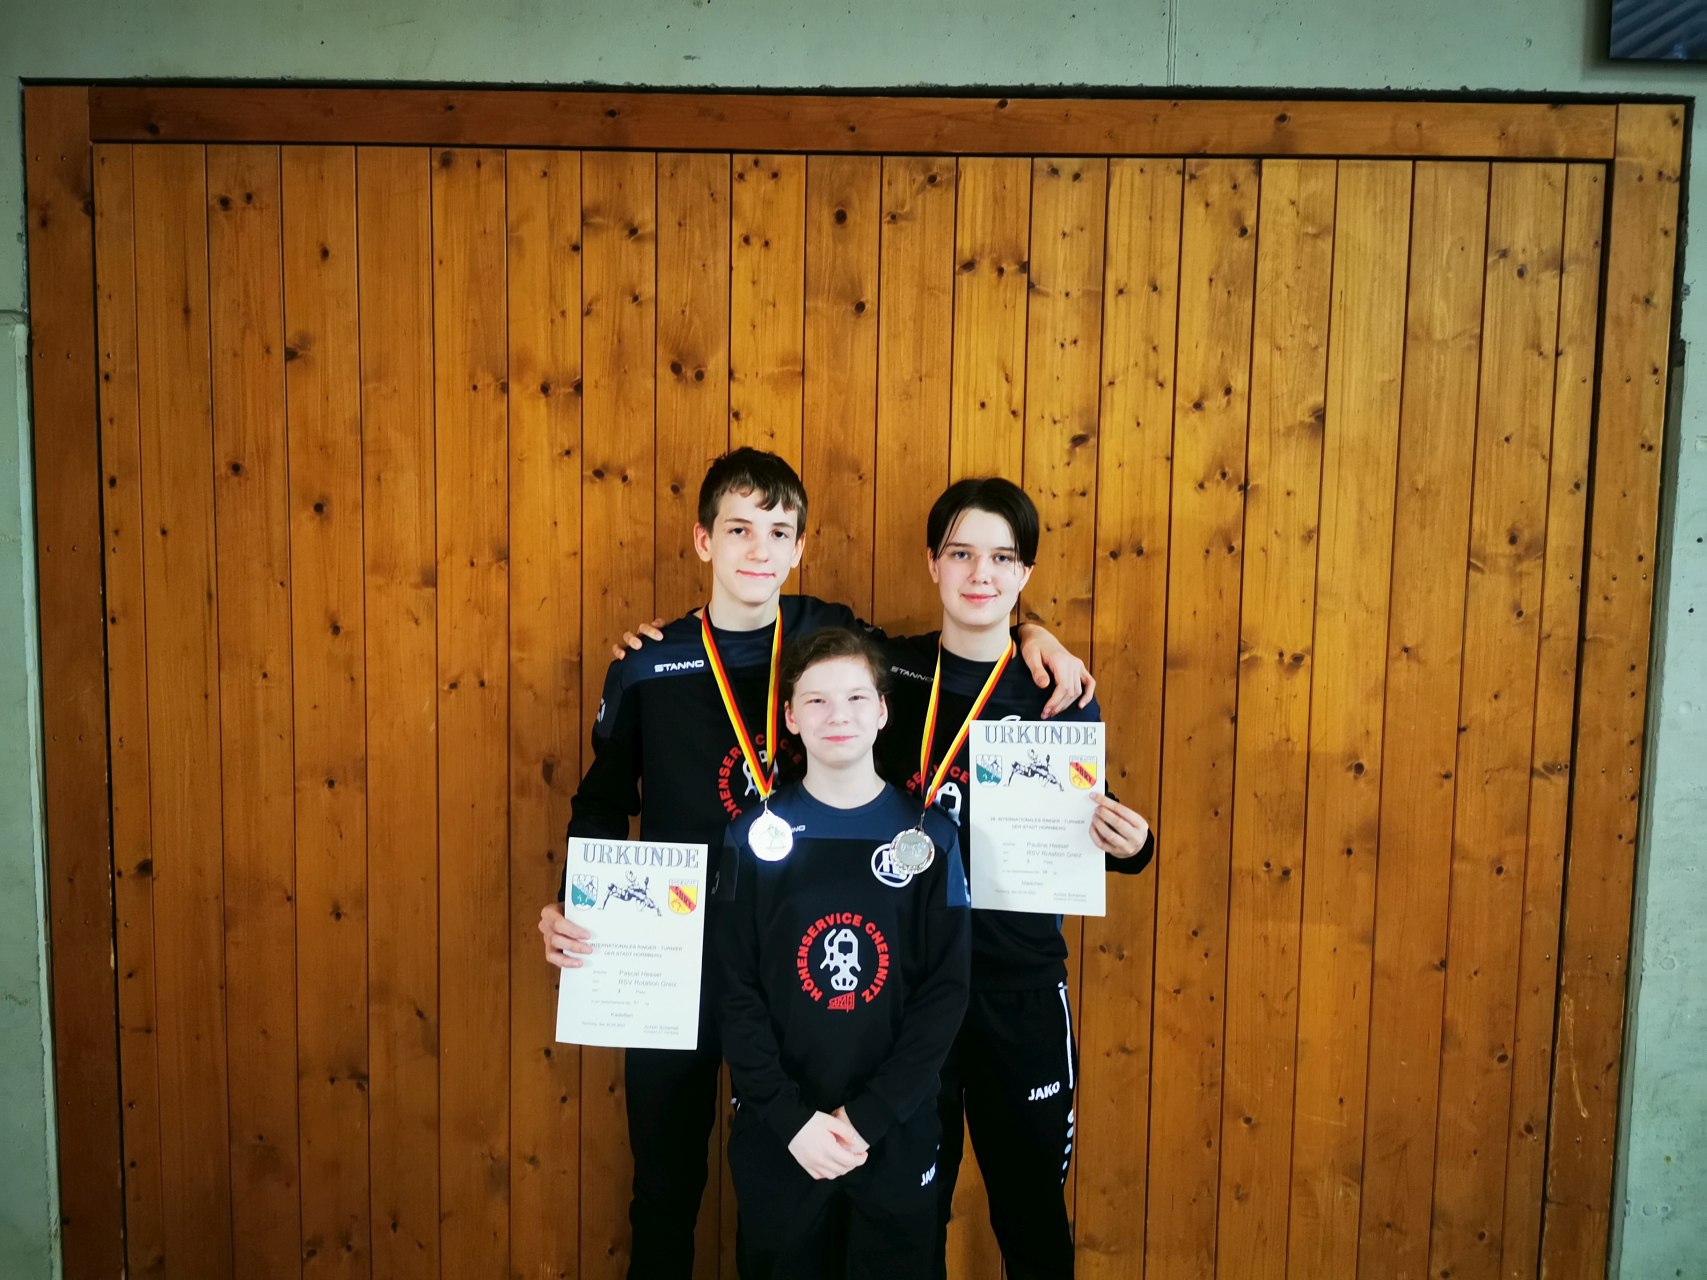 Hessel-Geschwister erringen jeweils Silbermedaille in Hornberg